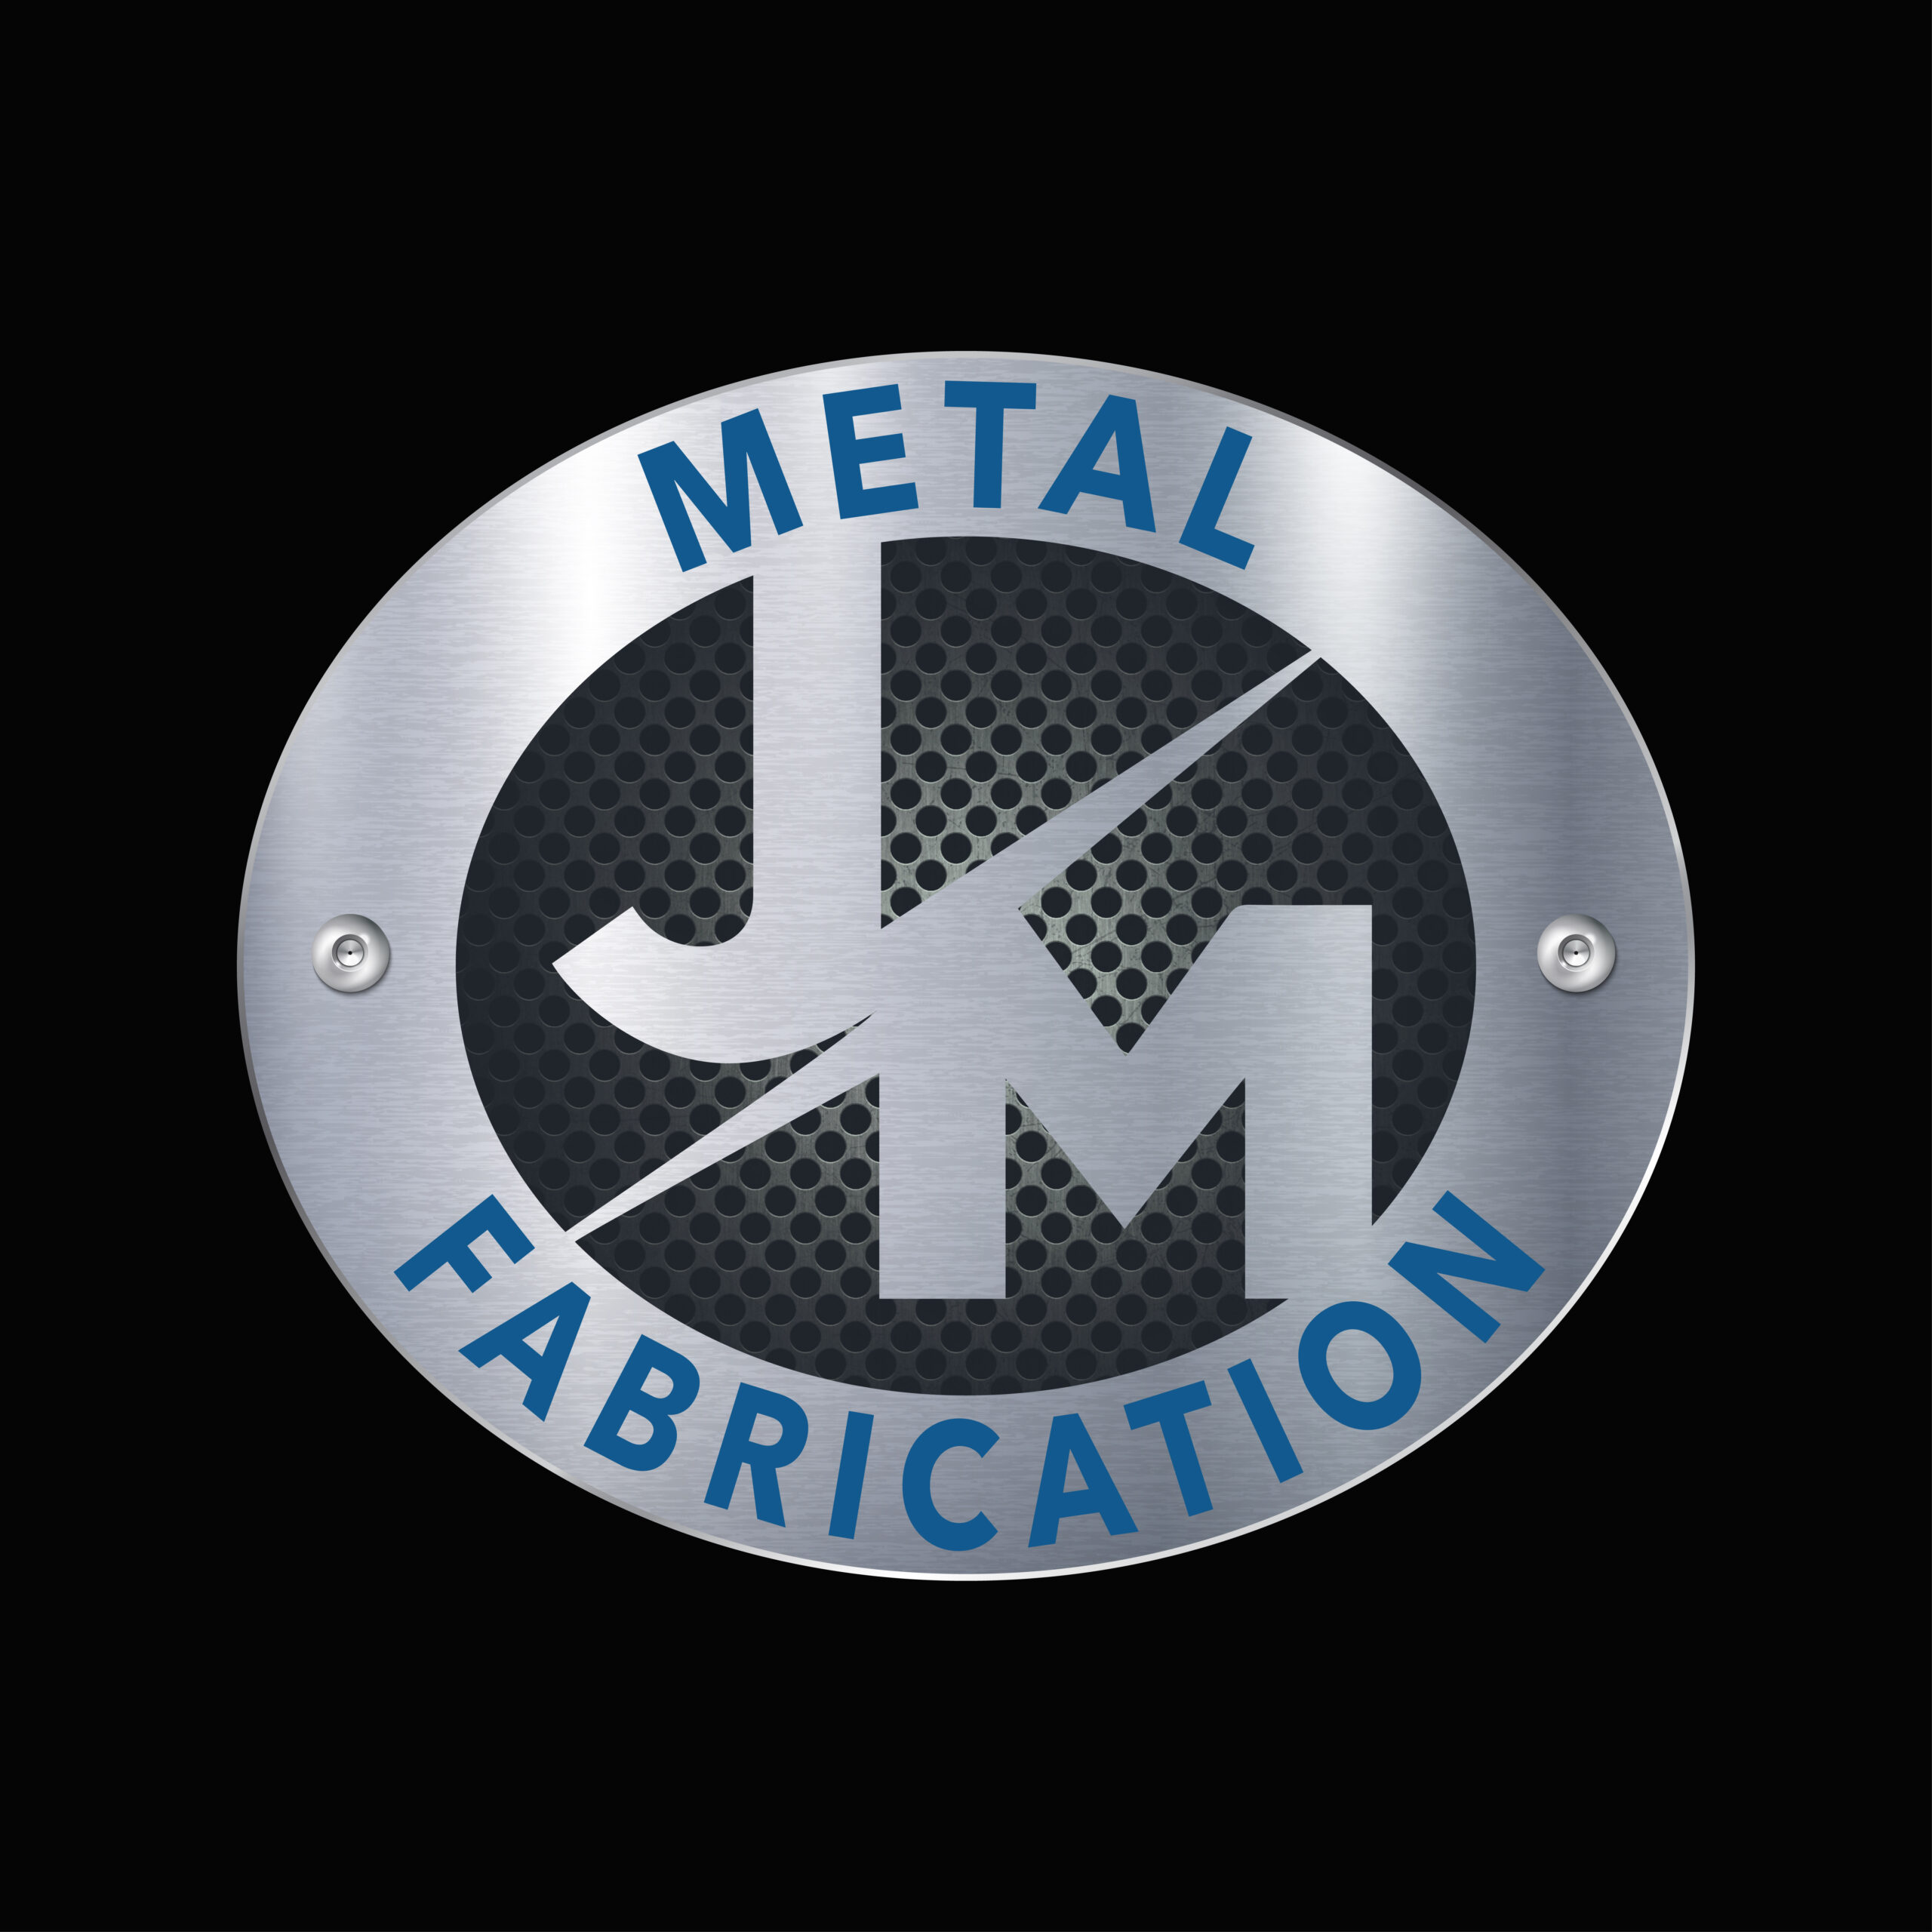 JM Metal Fabrication